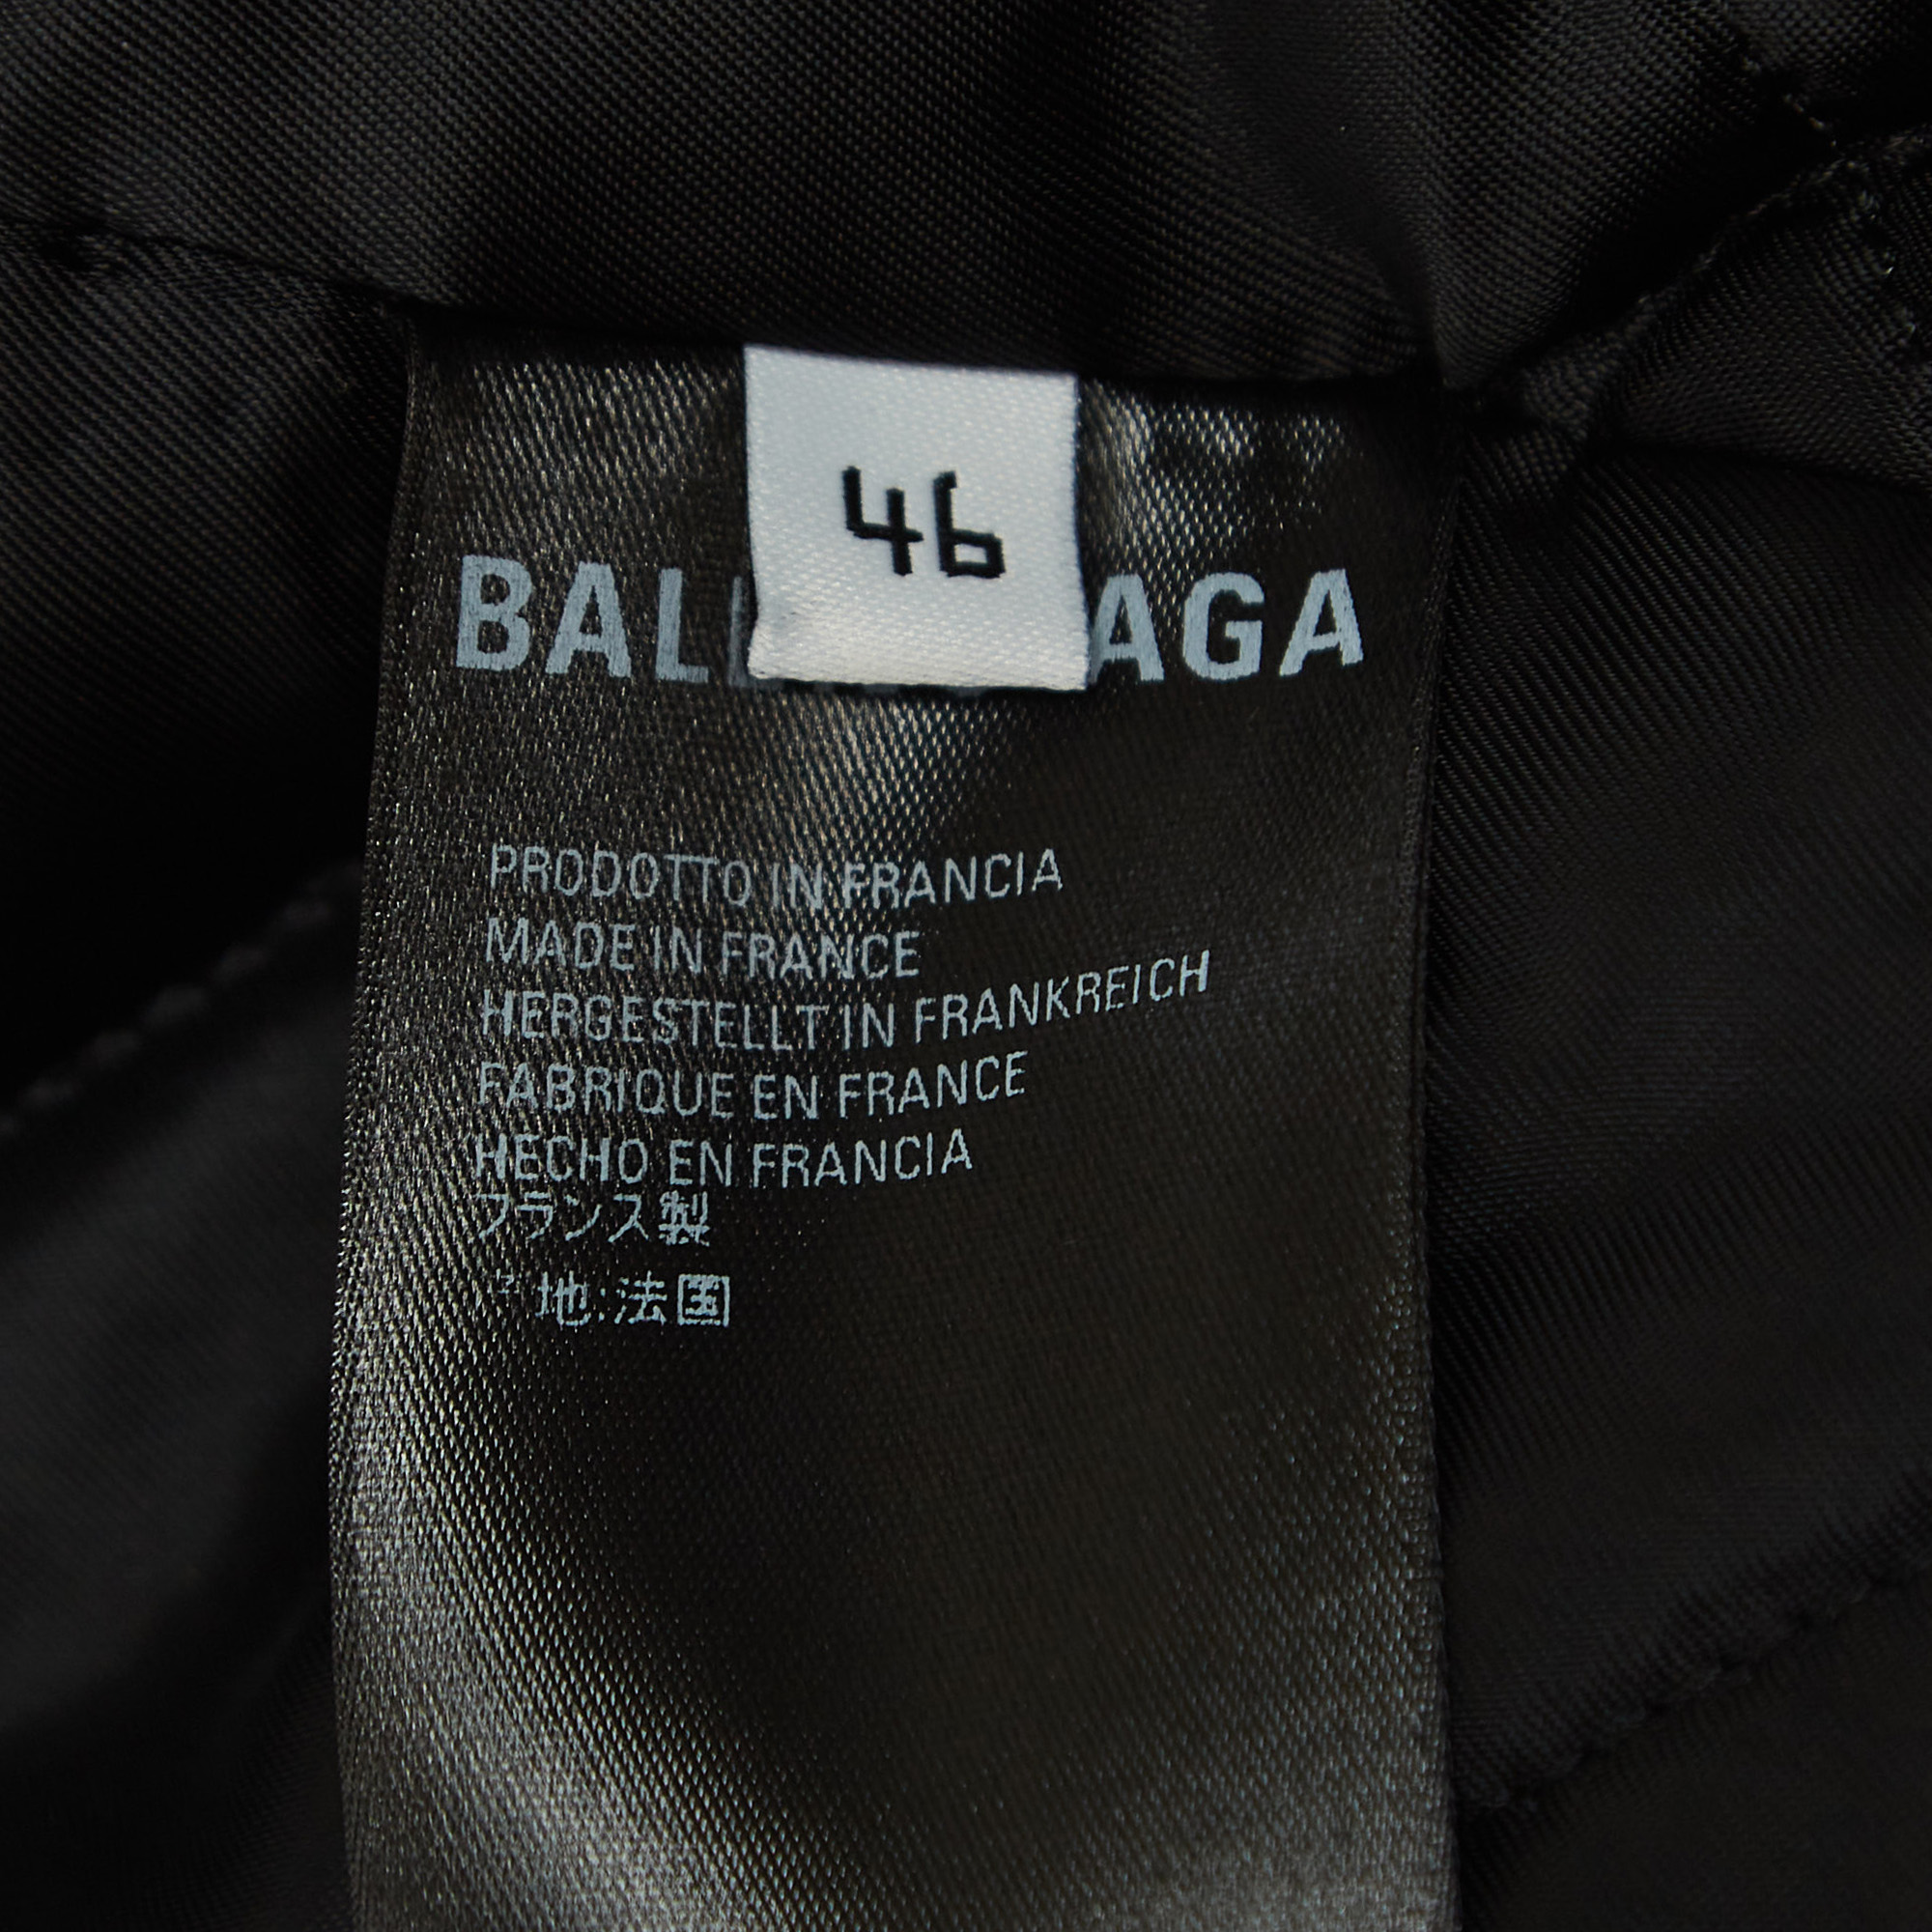 Balenciaga Black Logo Monogram Print Faux Fur Oversized Long Coat S